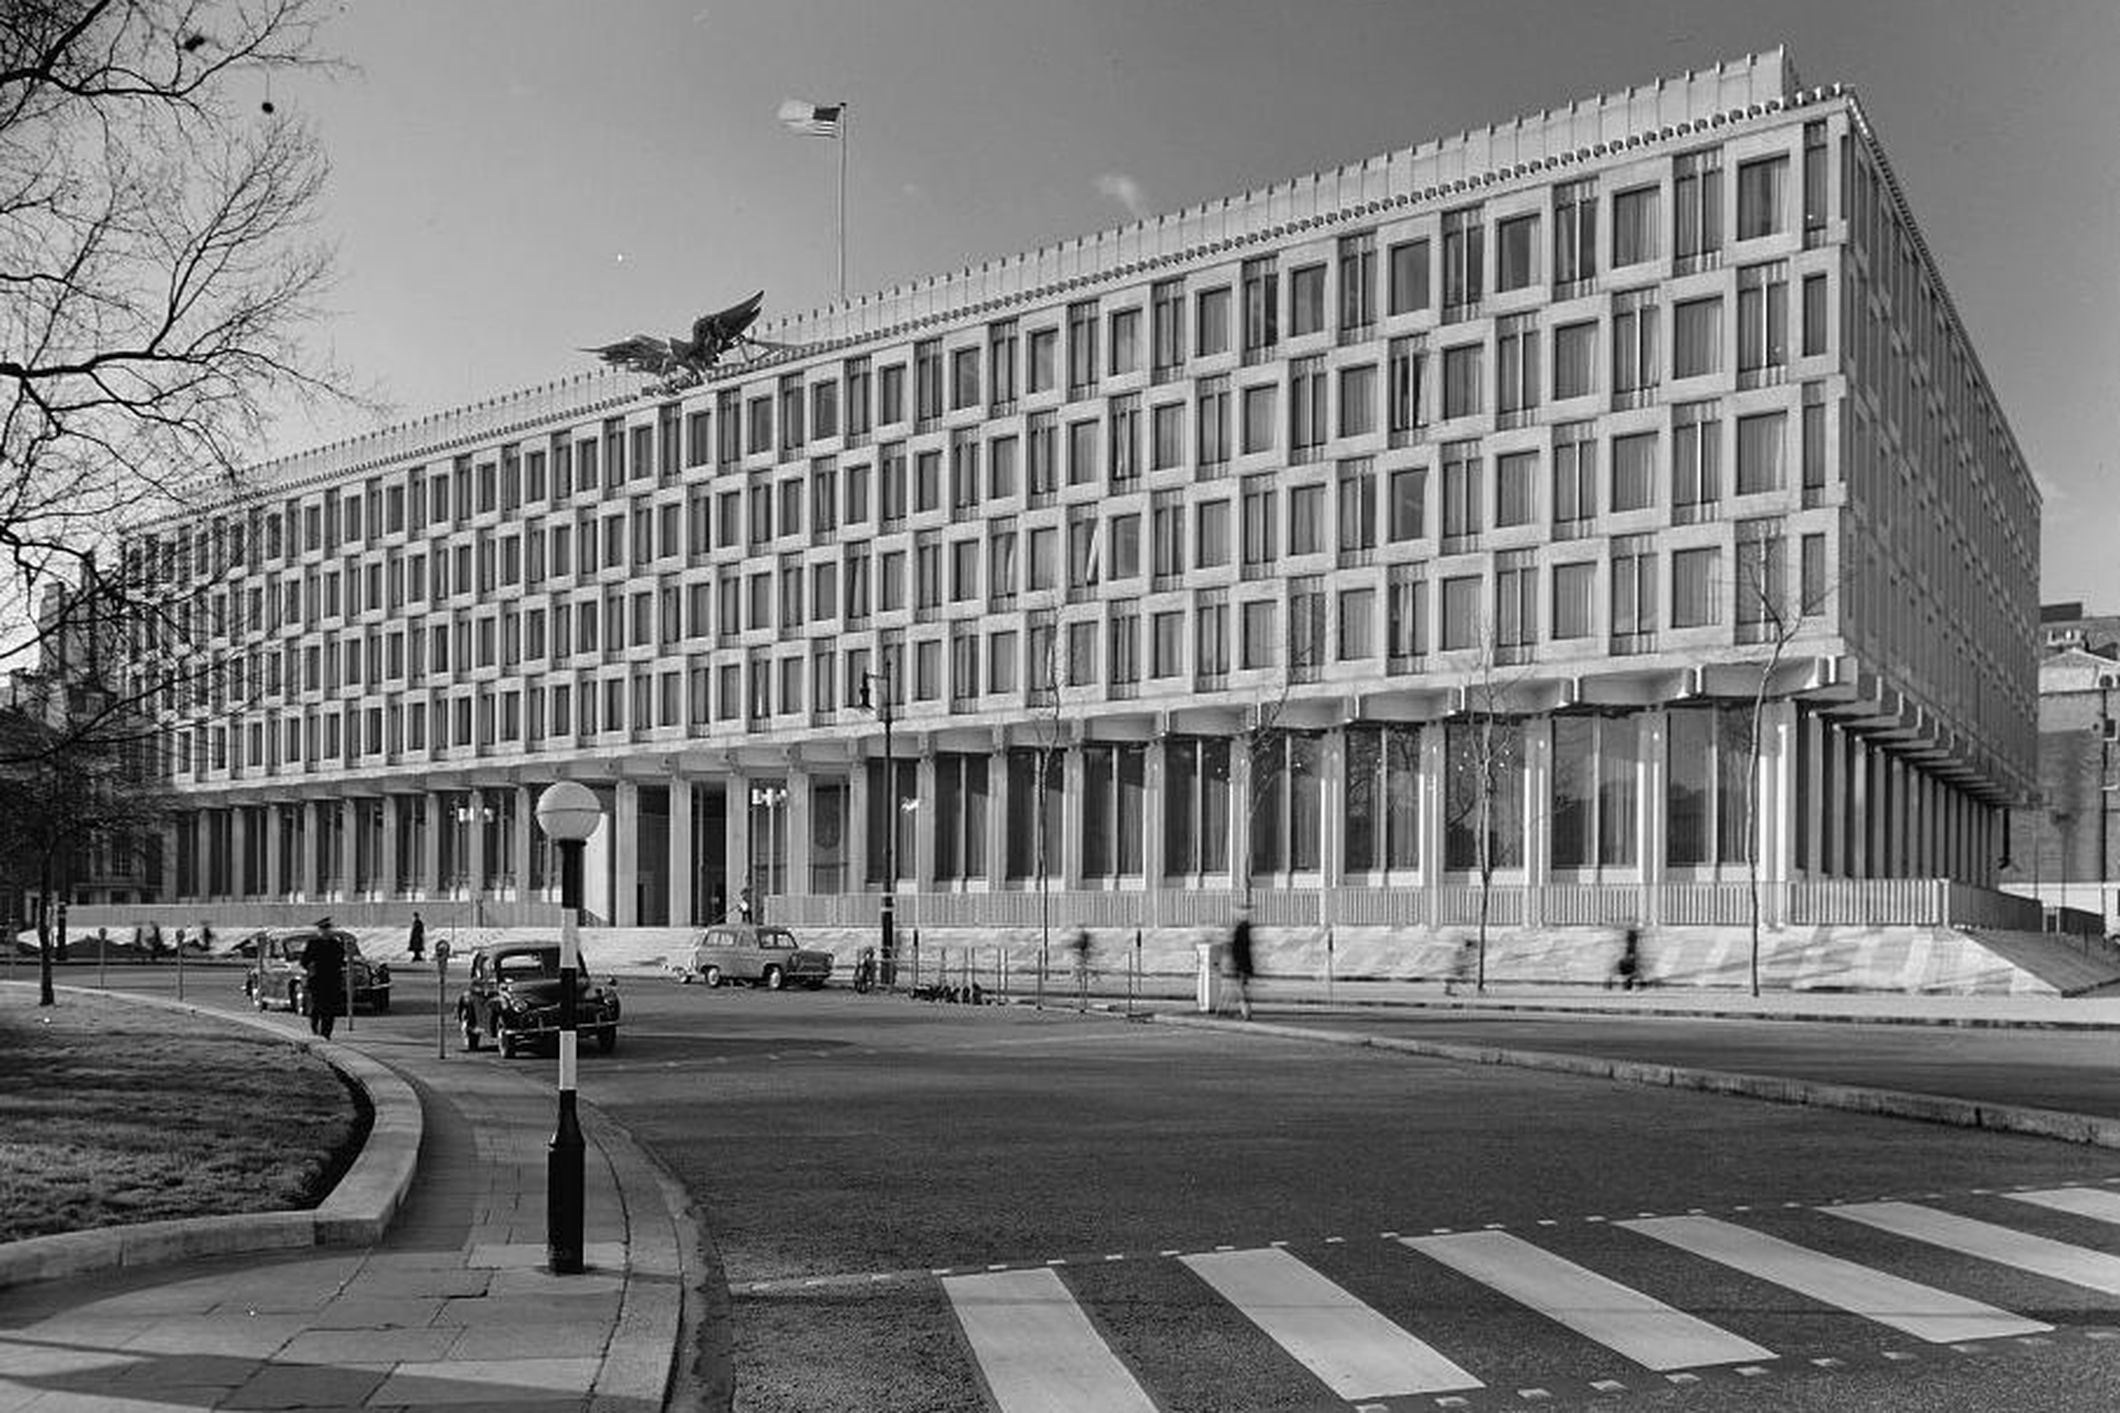 US Embassy - Eero Saarinen London, England (GB), 1960 as featured in Atlas of Brutalist Architecture
